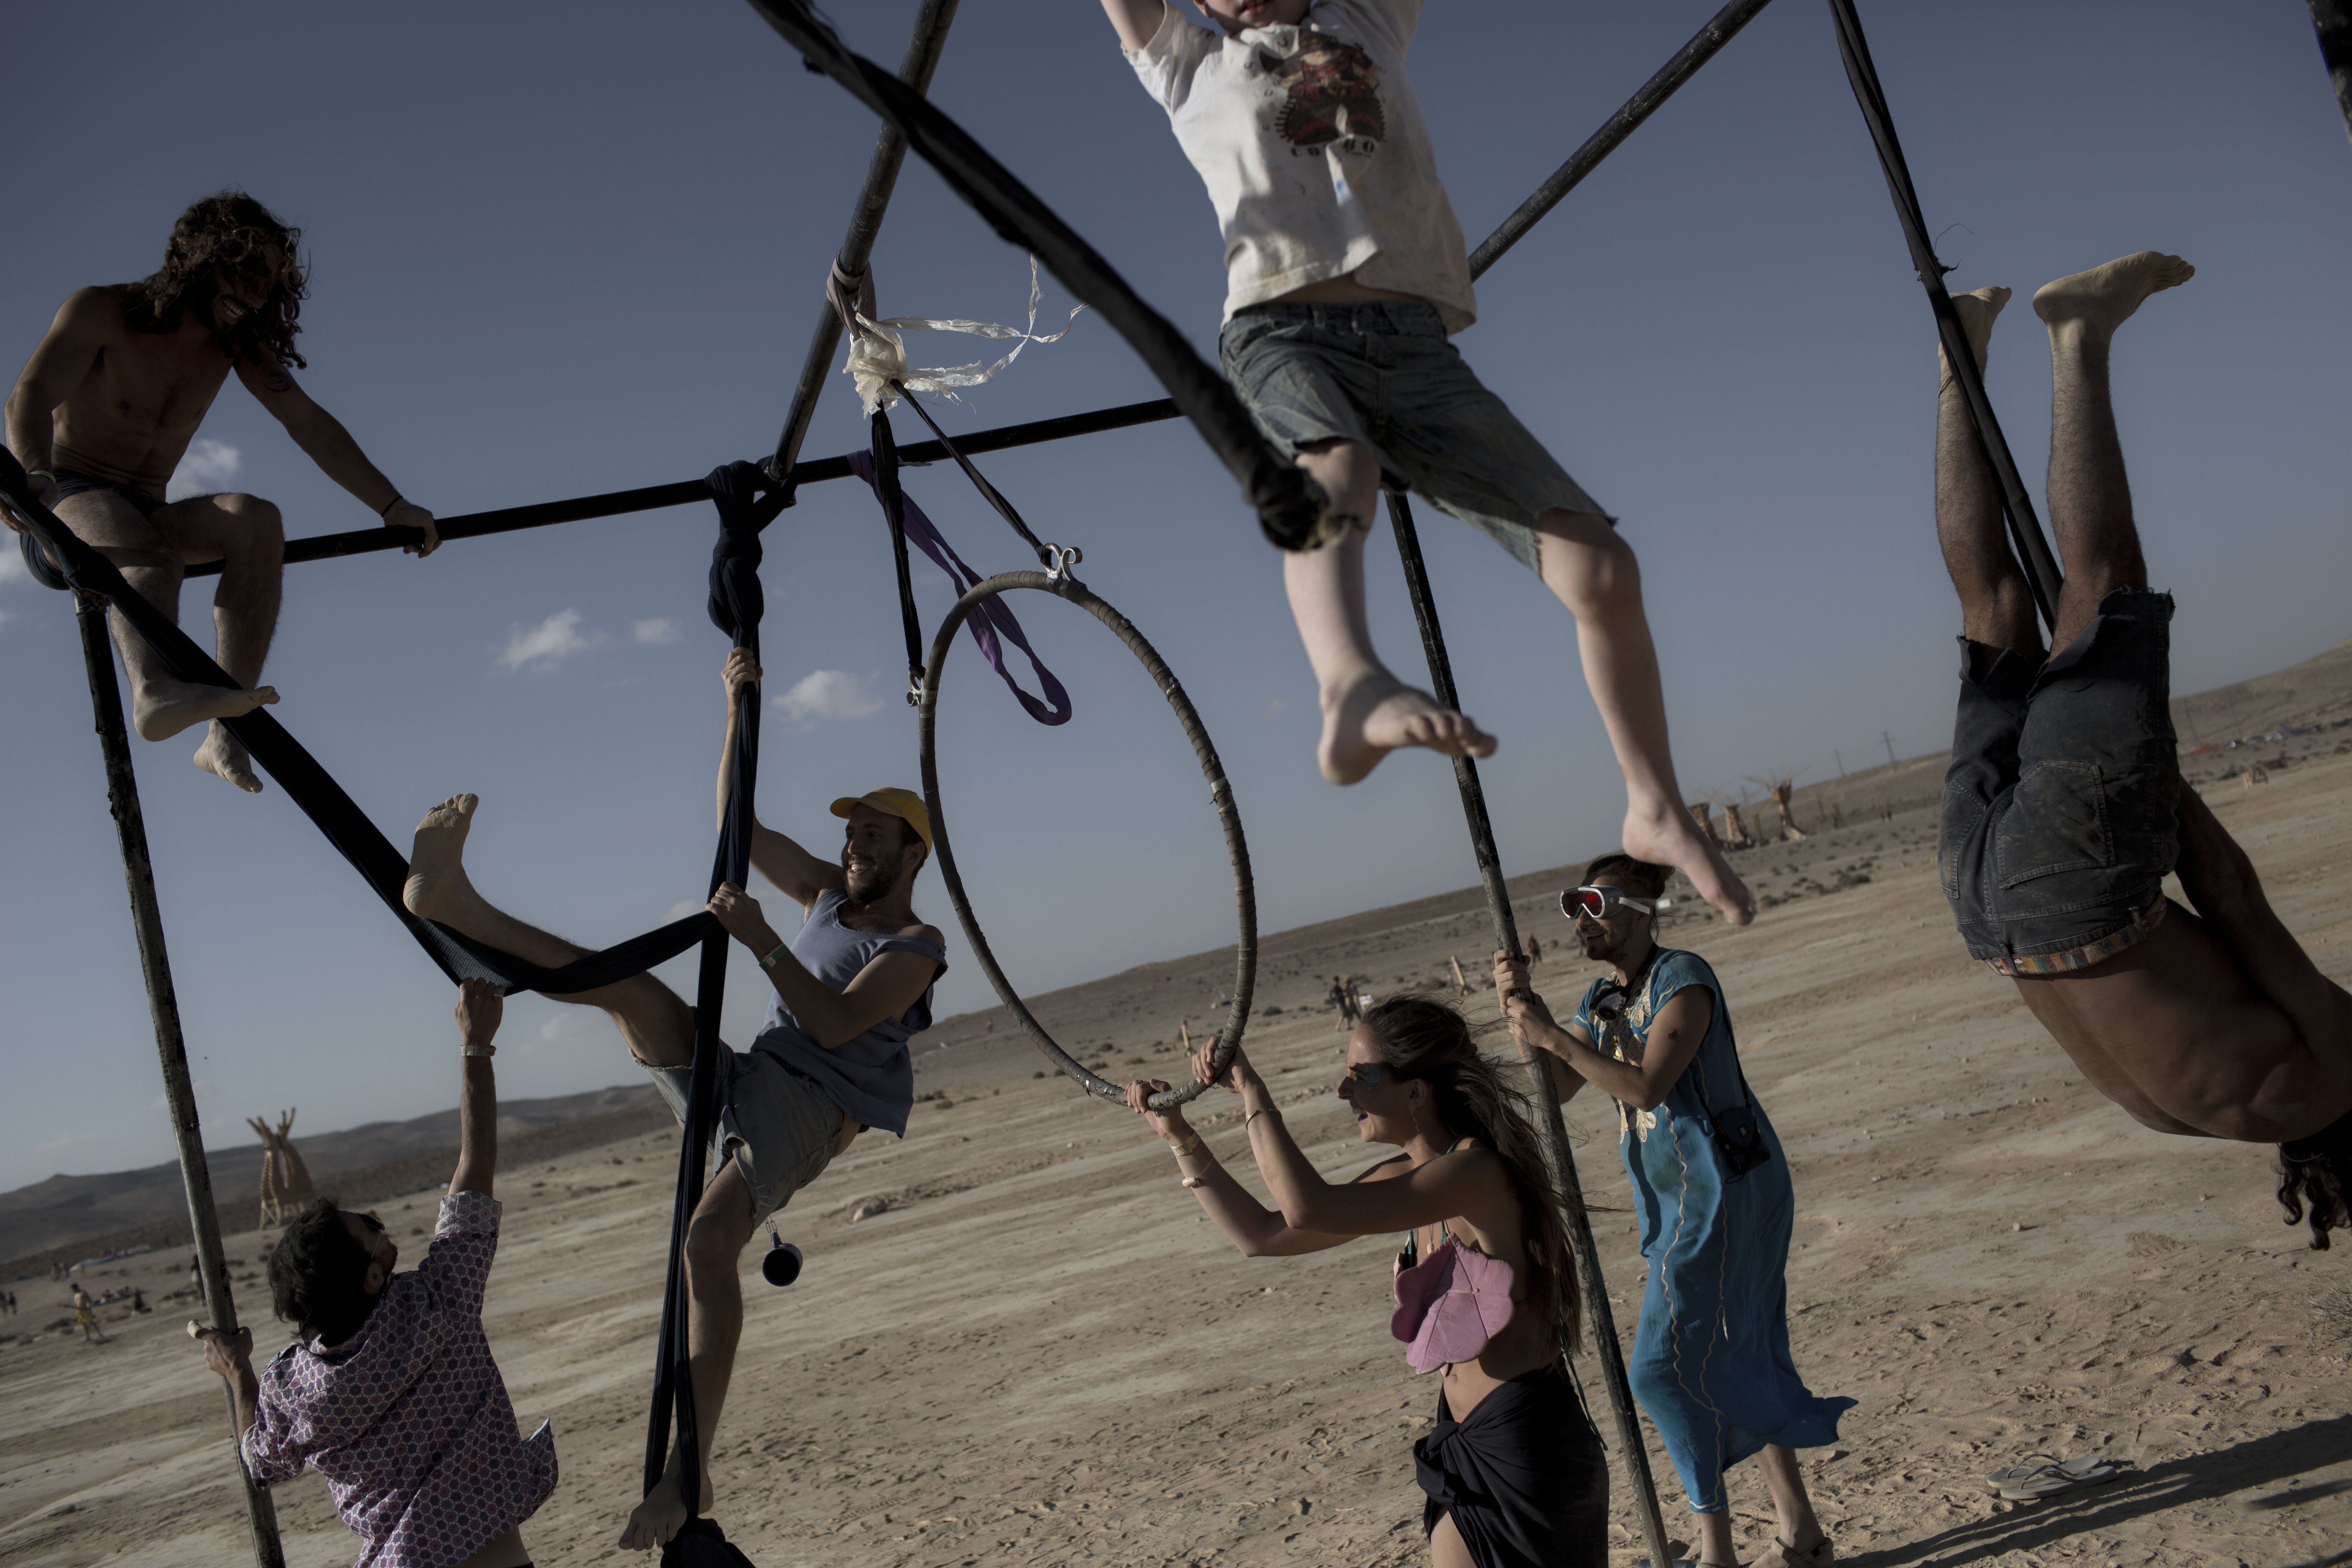 Israeli's climb on one of the art installation at Israel's first Midburn festival in the Negev Desert, Israel on June 6, 2014.